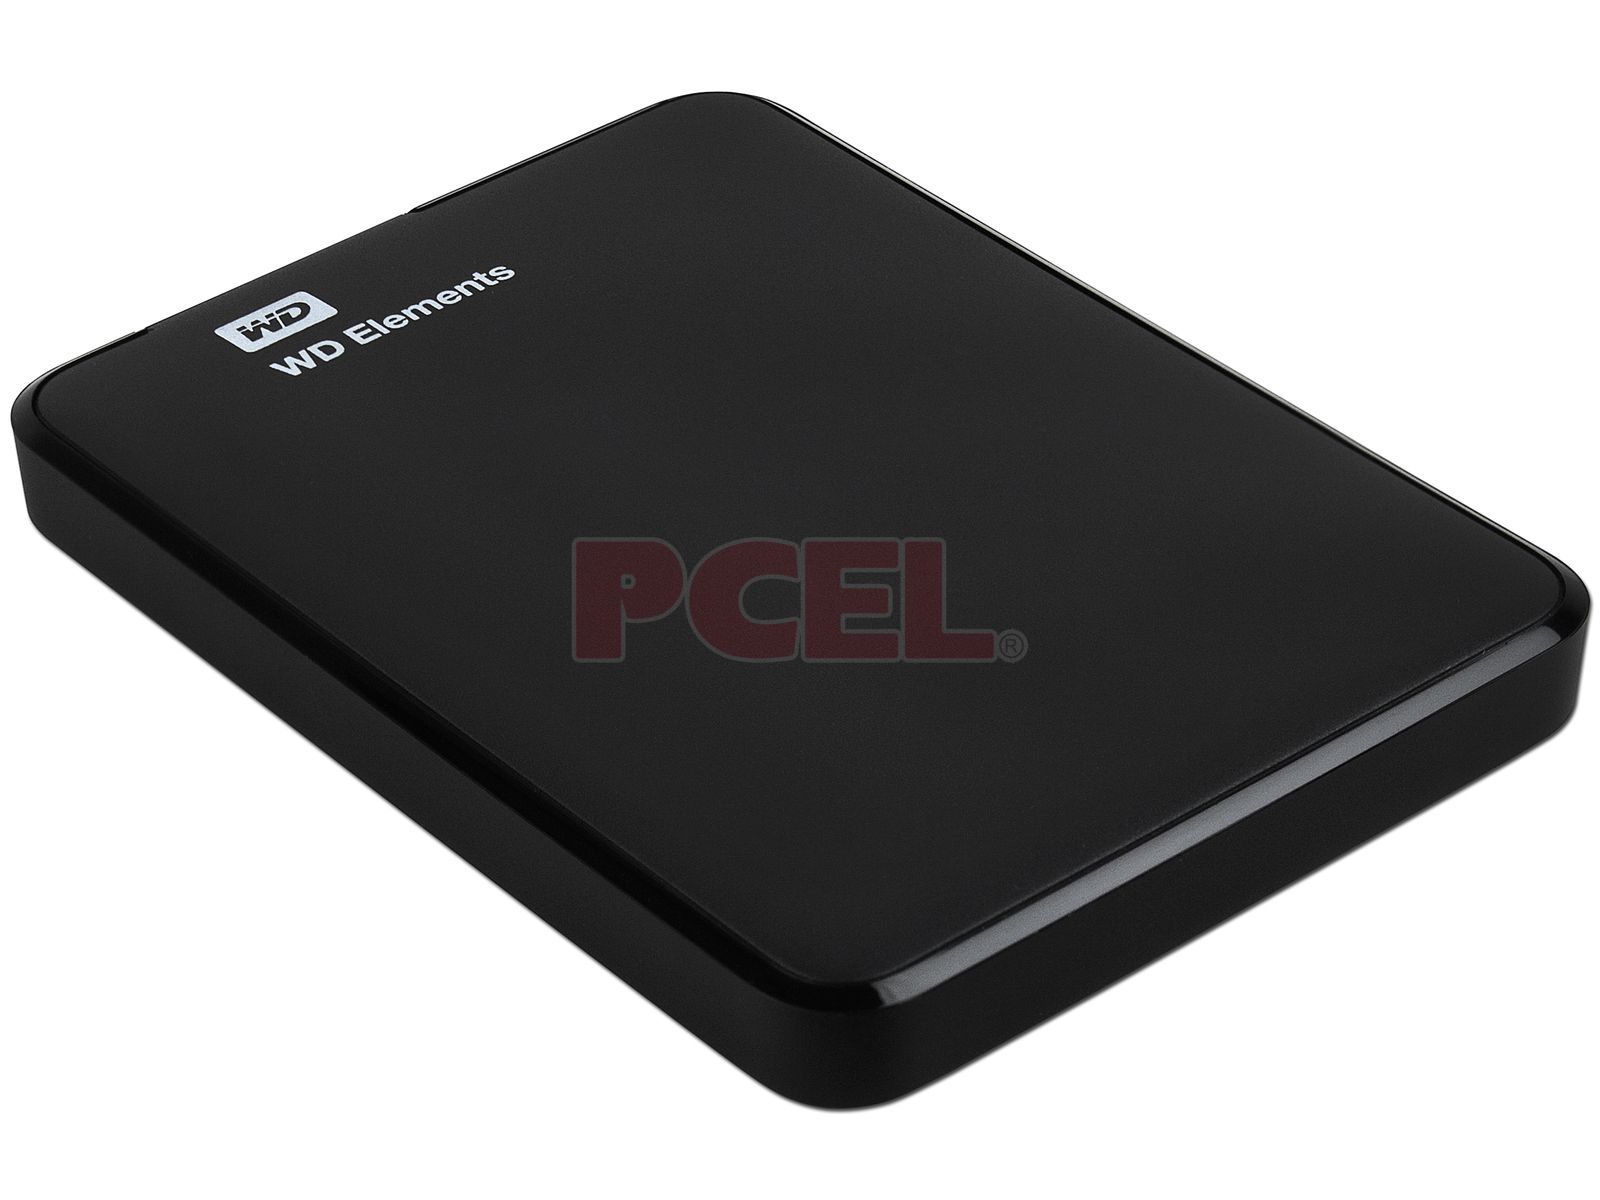 HDD02 Reproductor multimedia para disco duro, portátil